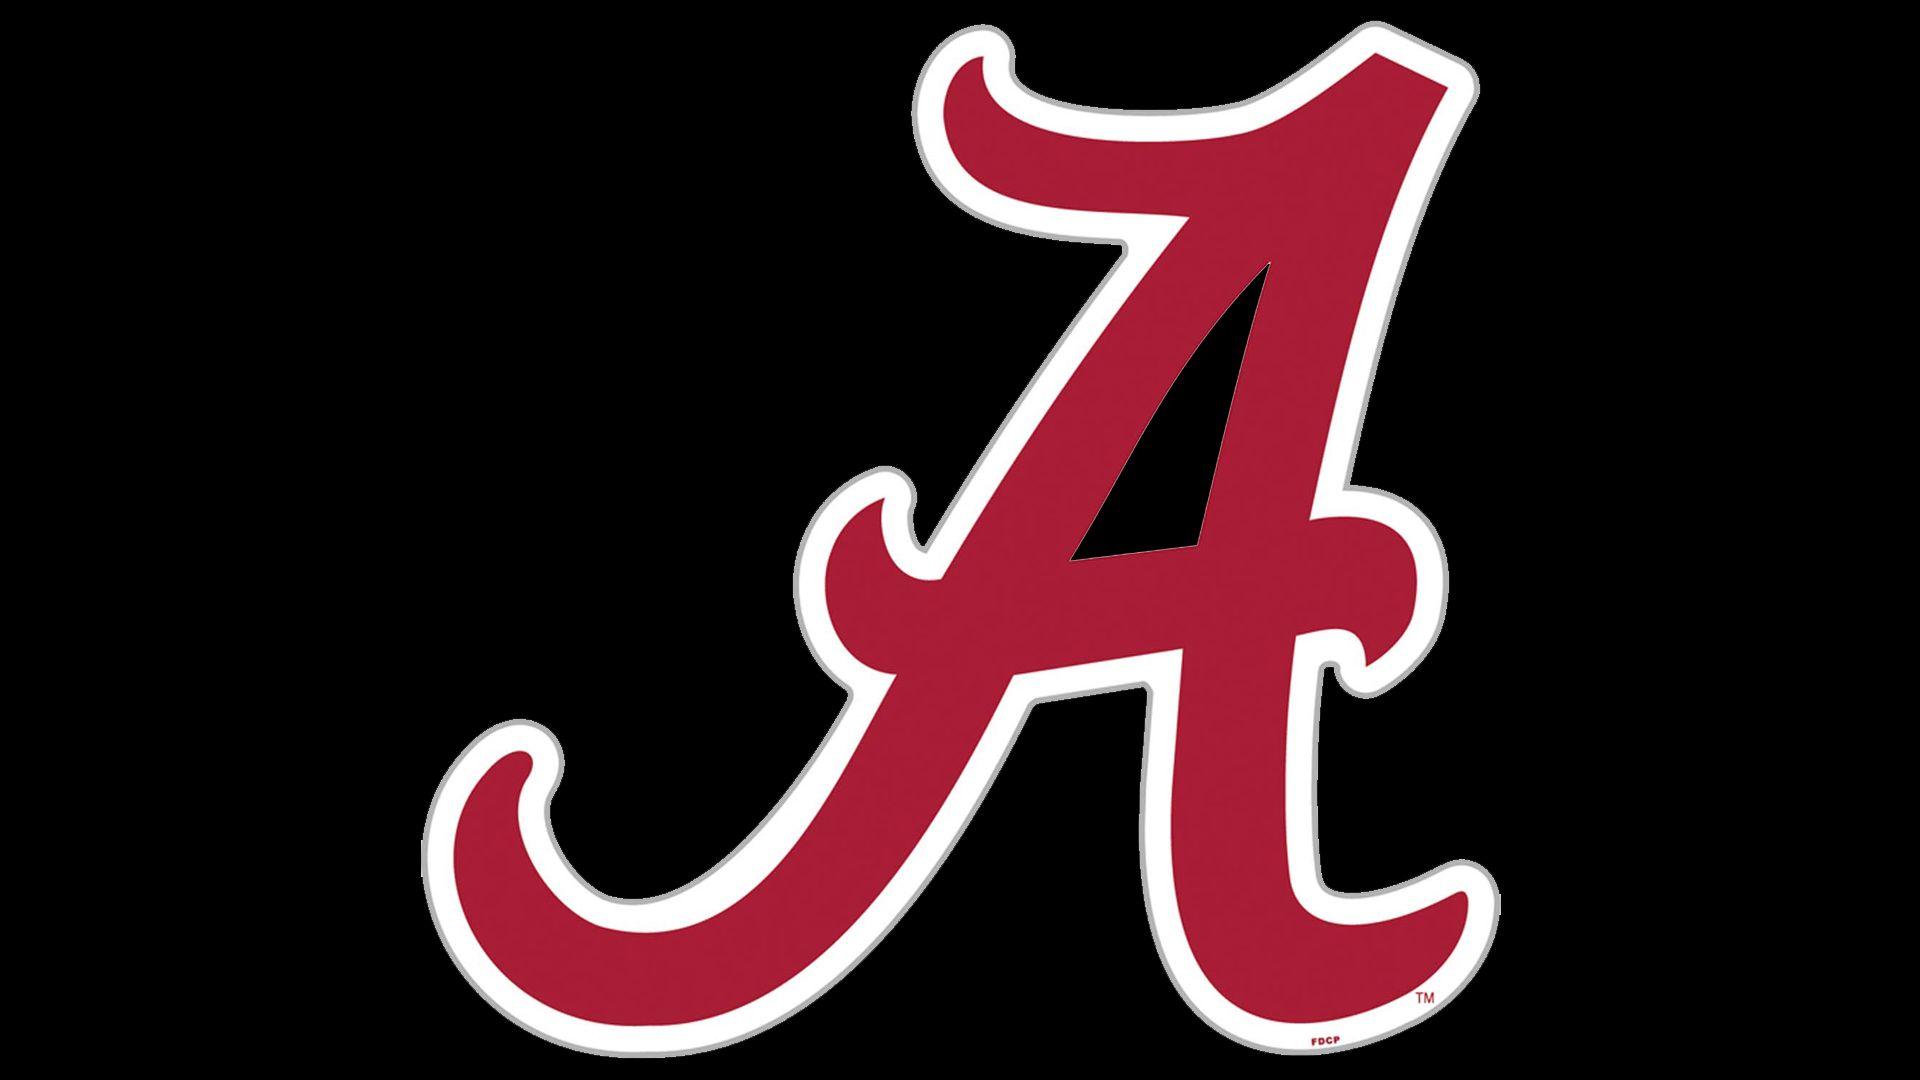 Alabama Crimson Tide Football Logo - Alabama Crimson Tide Logo, Alabama Crimson Tide Symbol, Meaning ...